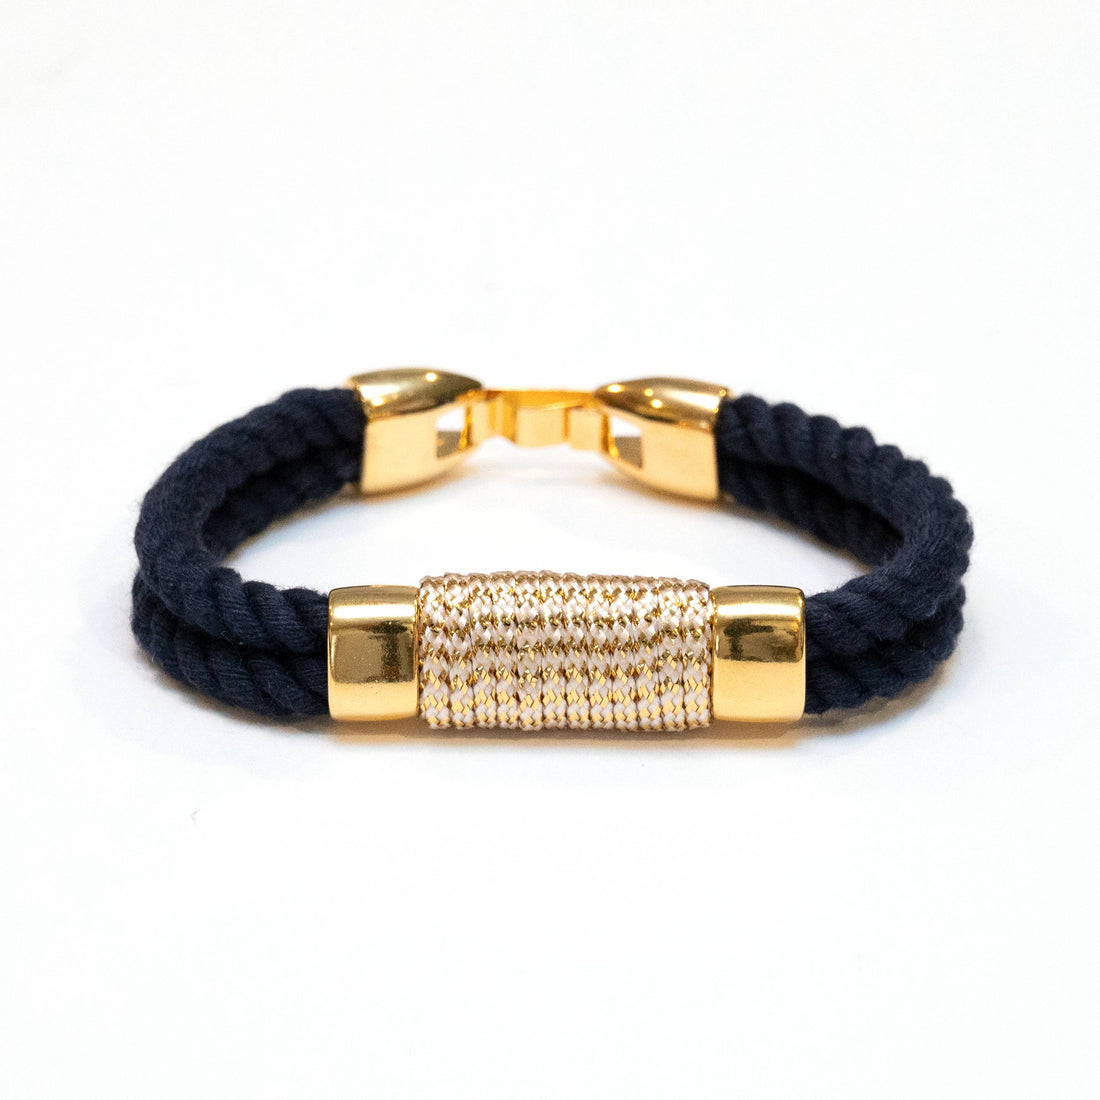 Tremont Bracelet - Navy/Metallic Gold: L